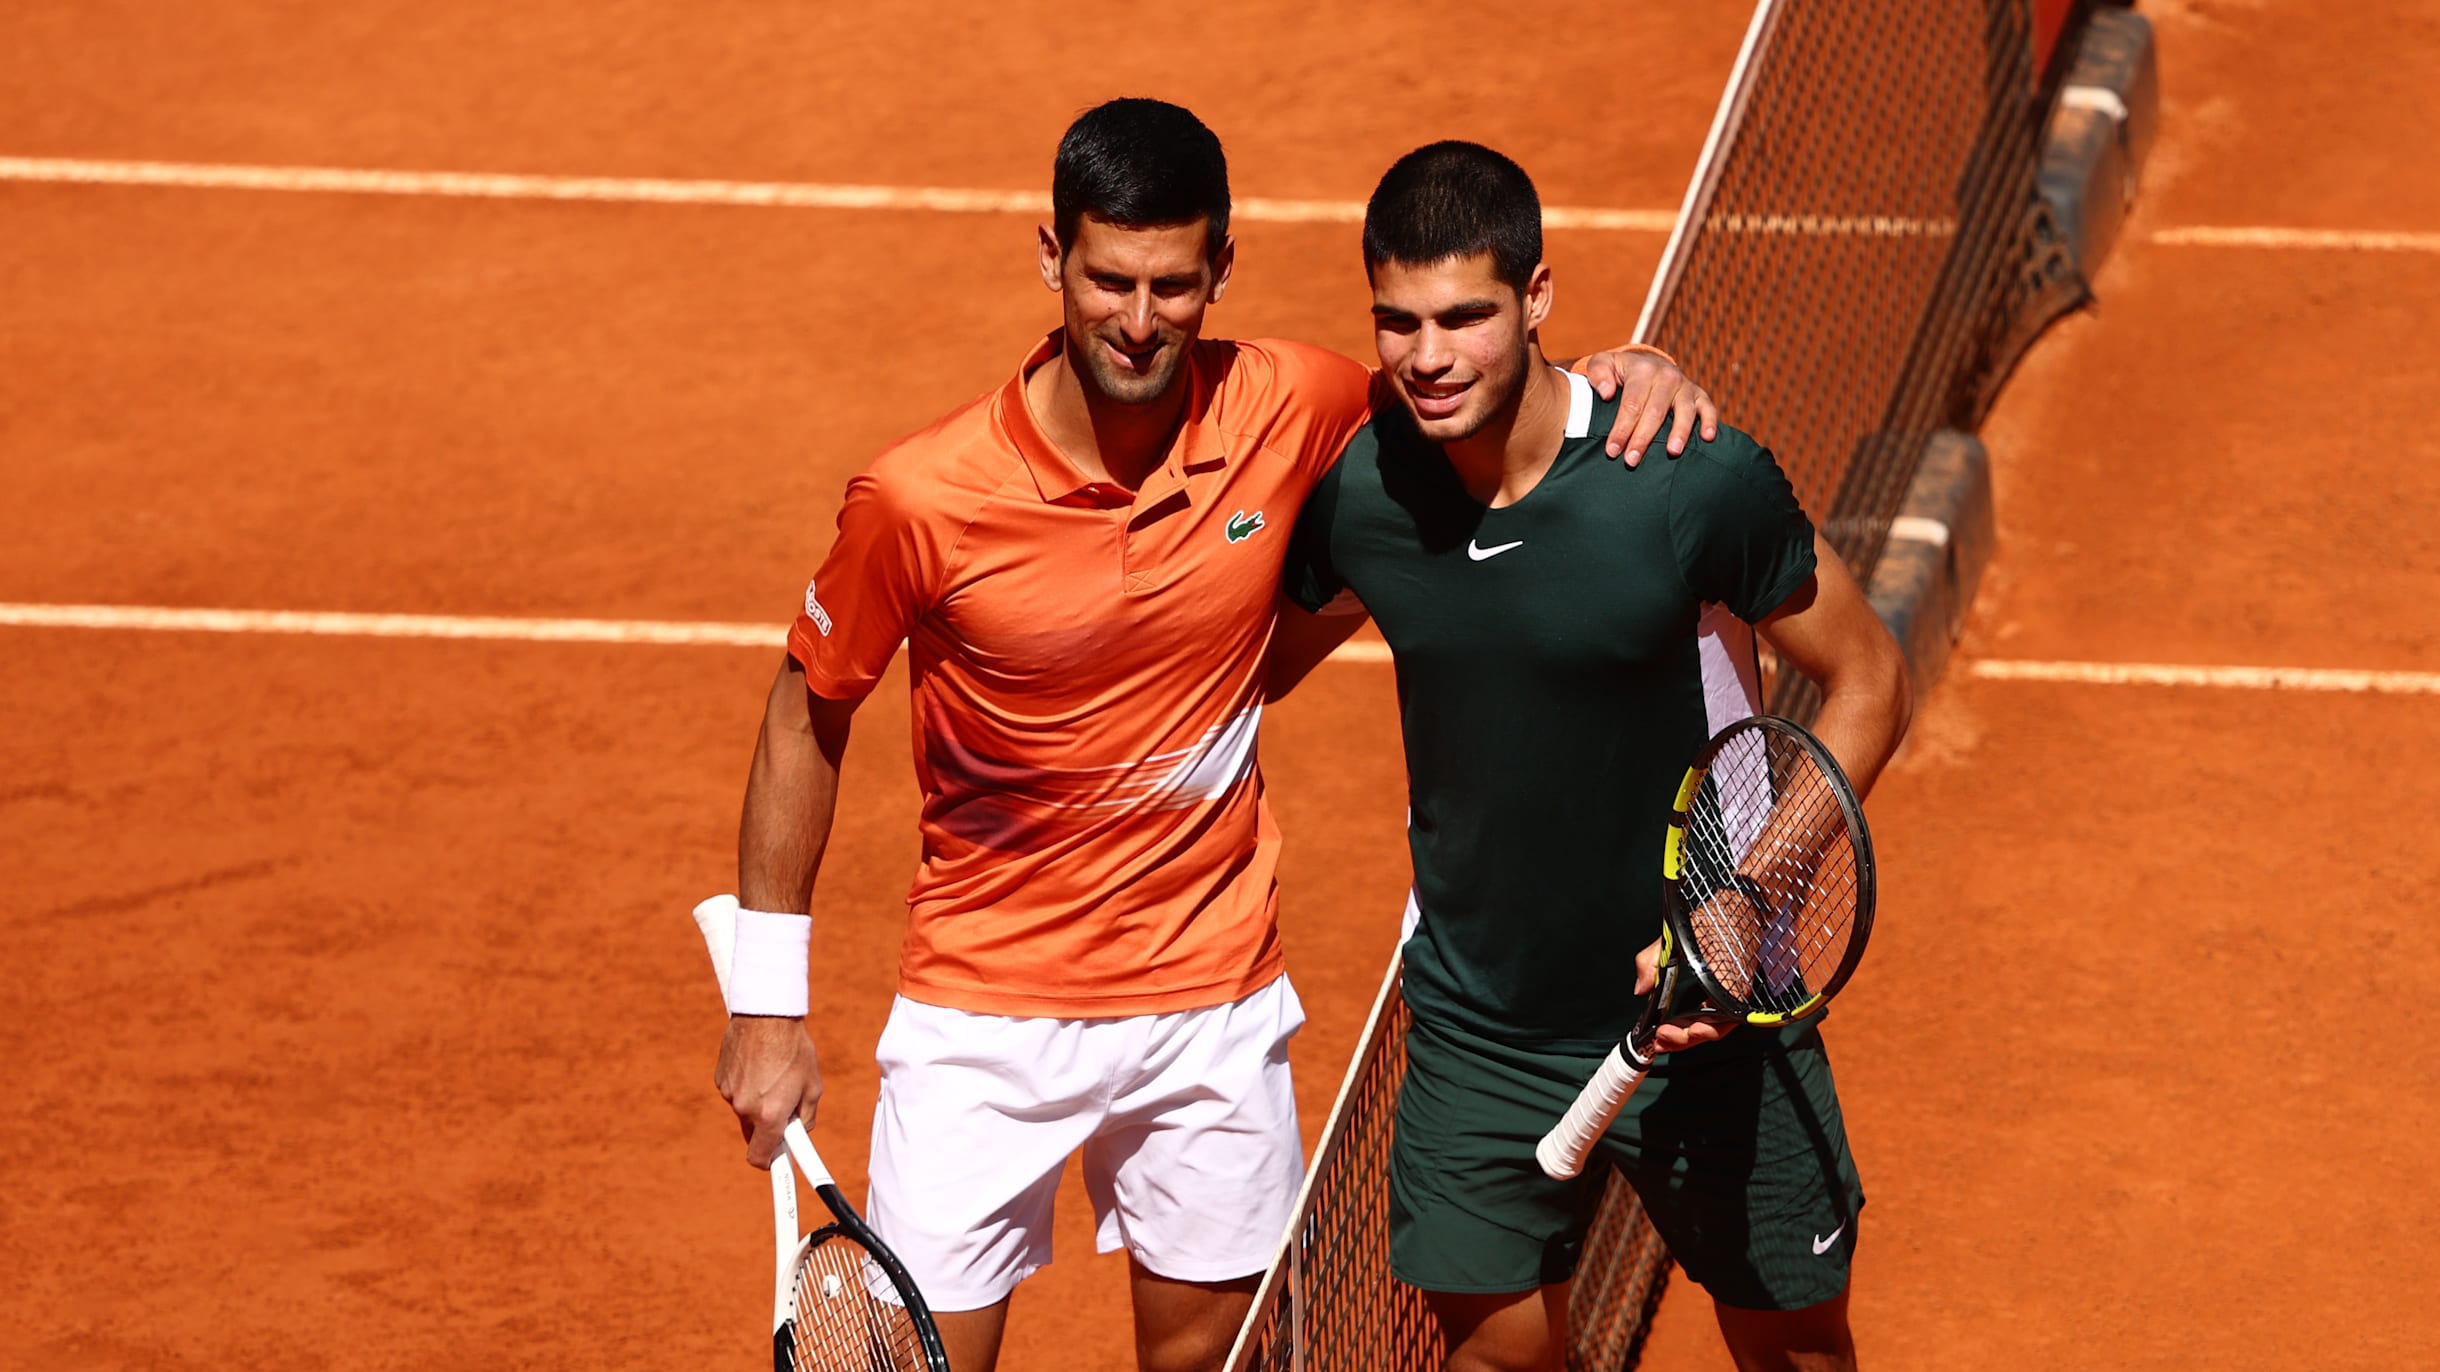 Novak Djokovic's next match: Opponent, venue, live streaming, TV